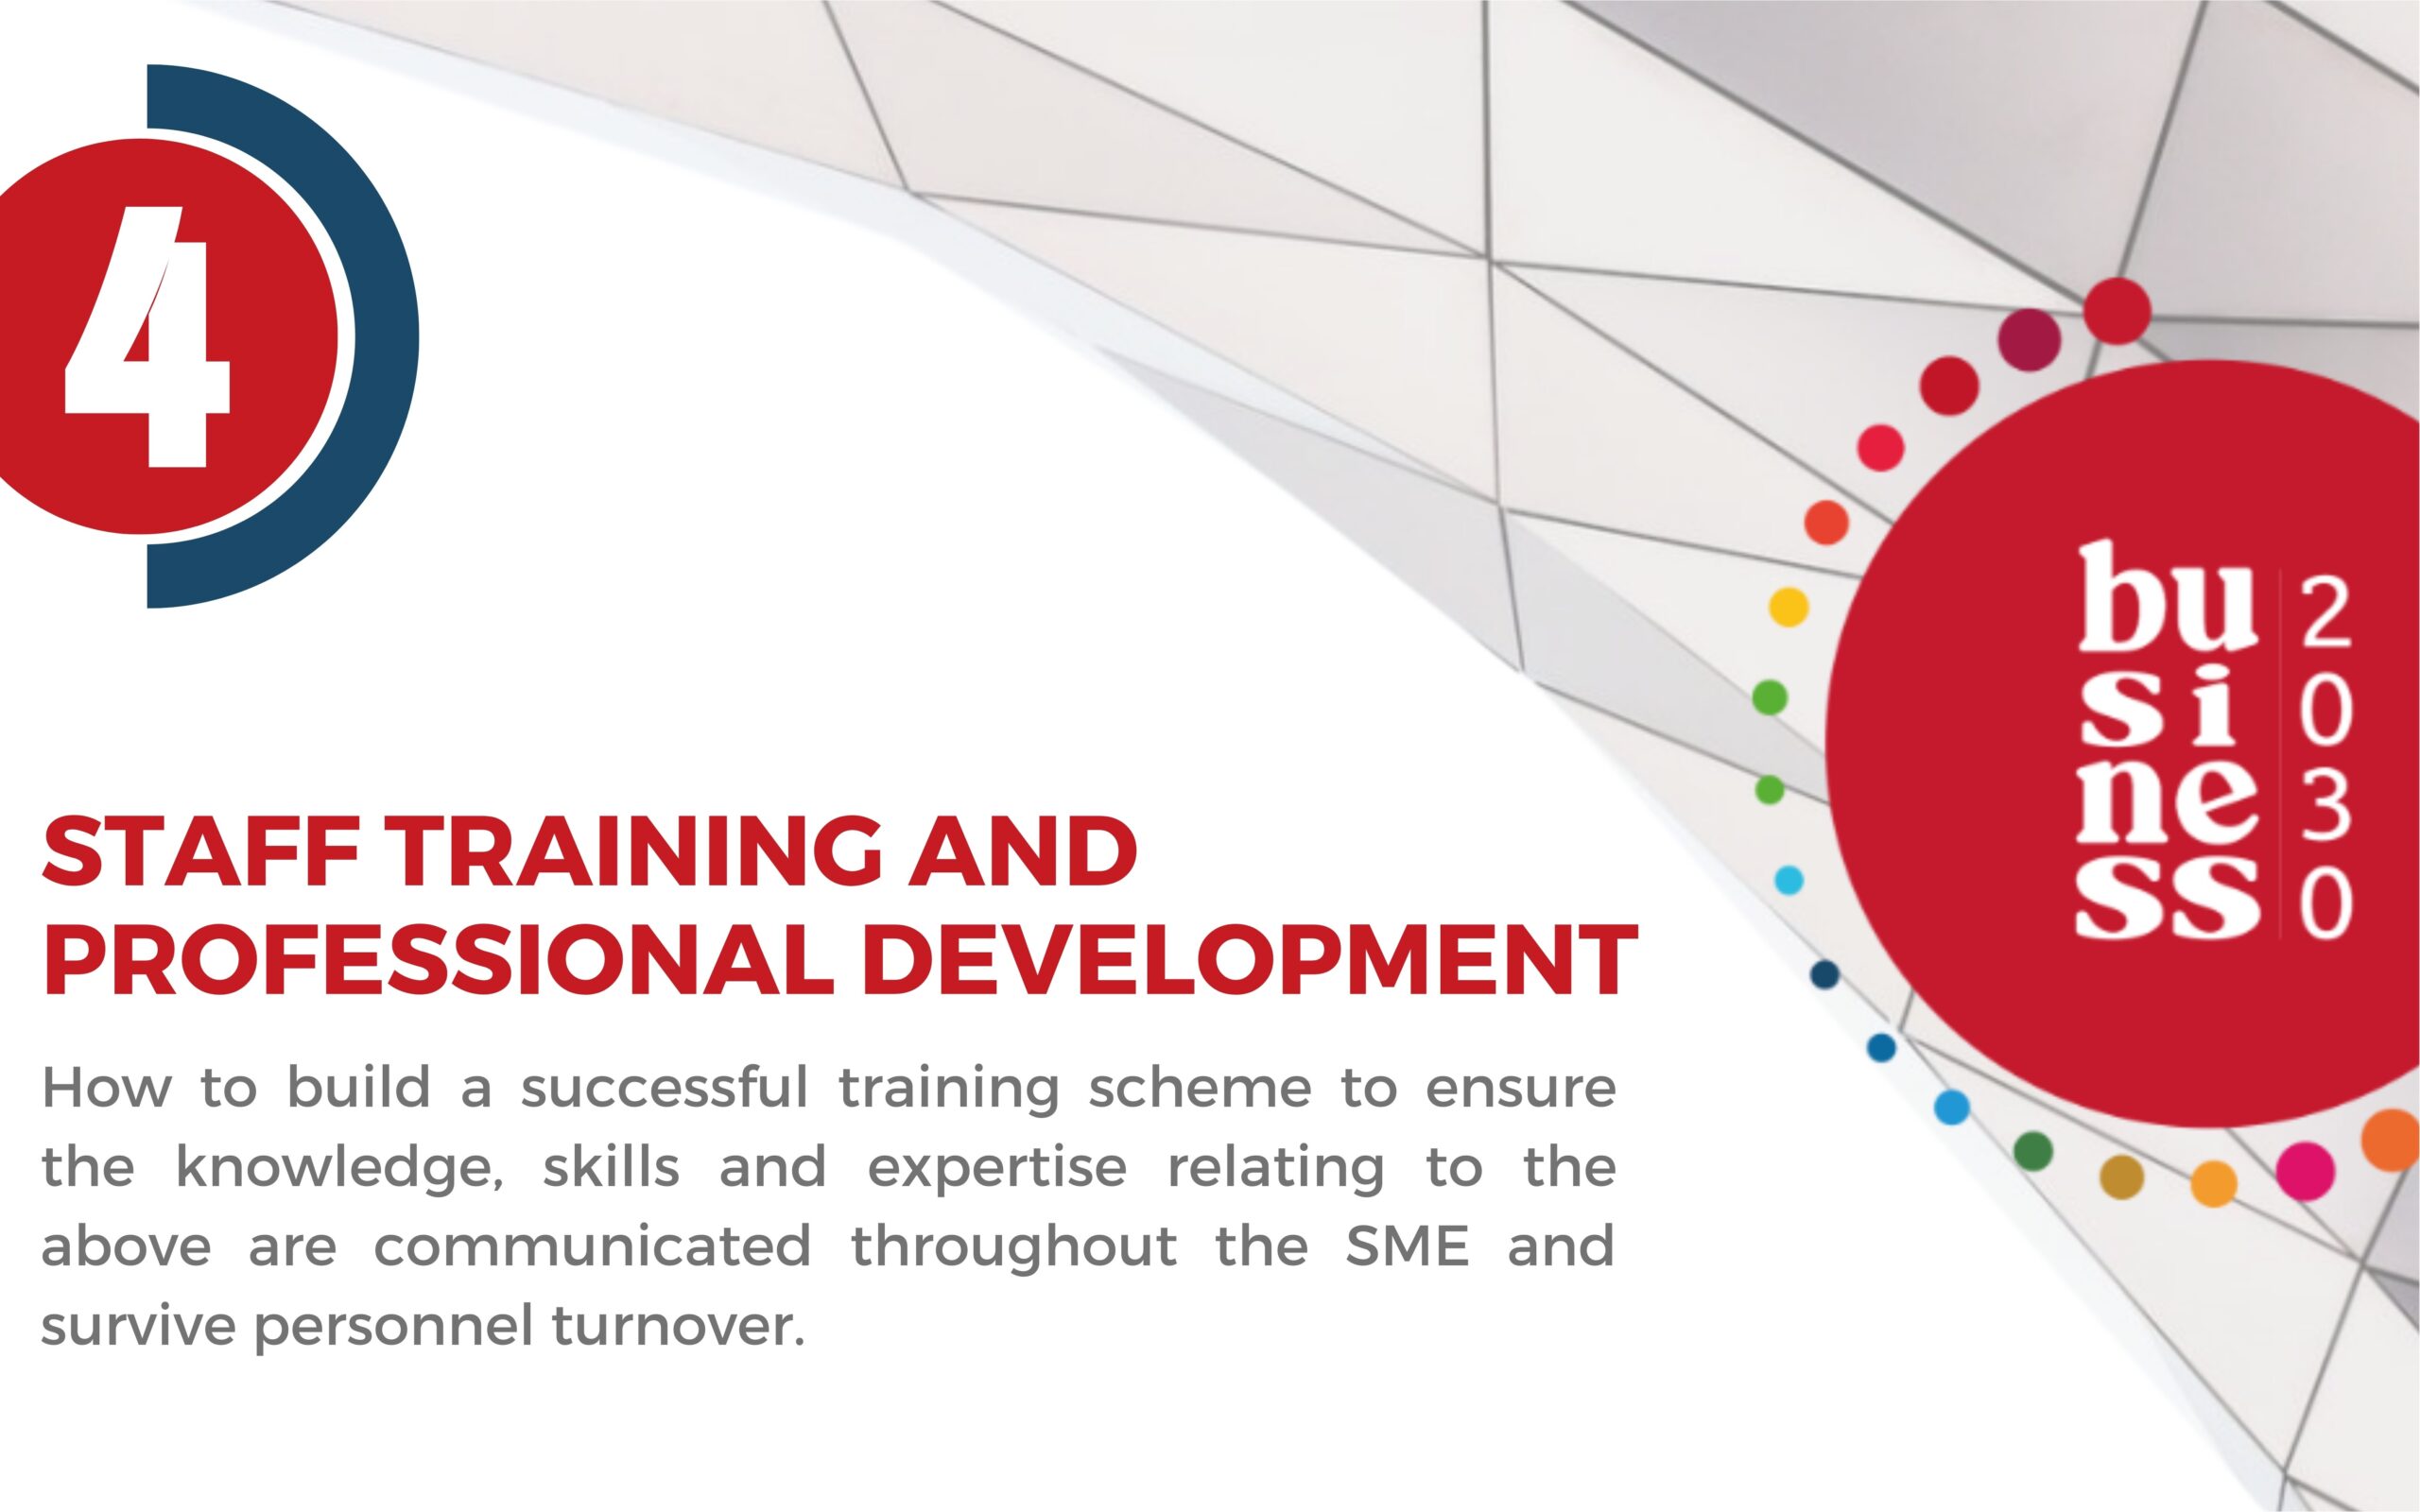 4. Staff training and professional development